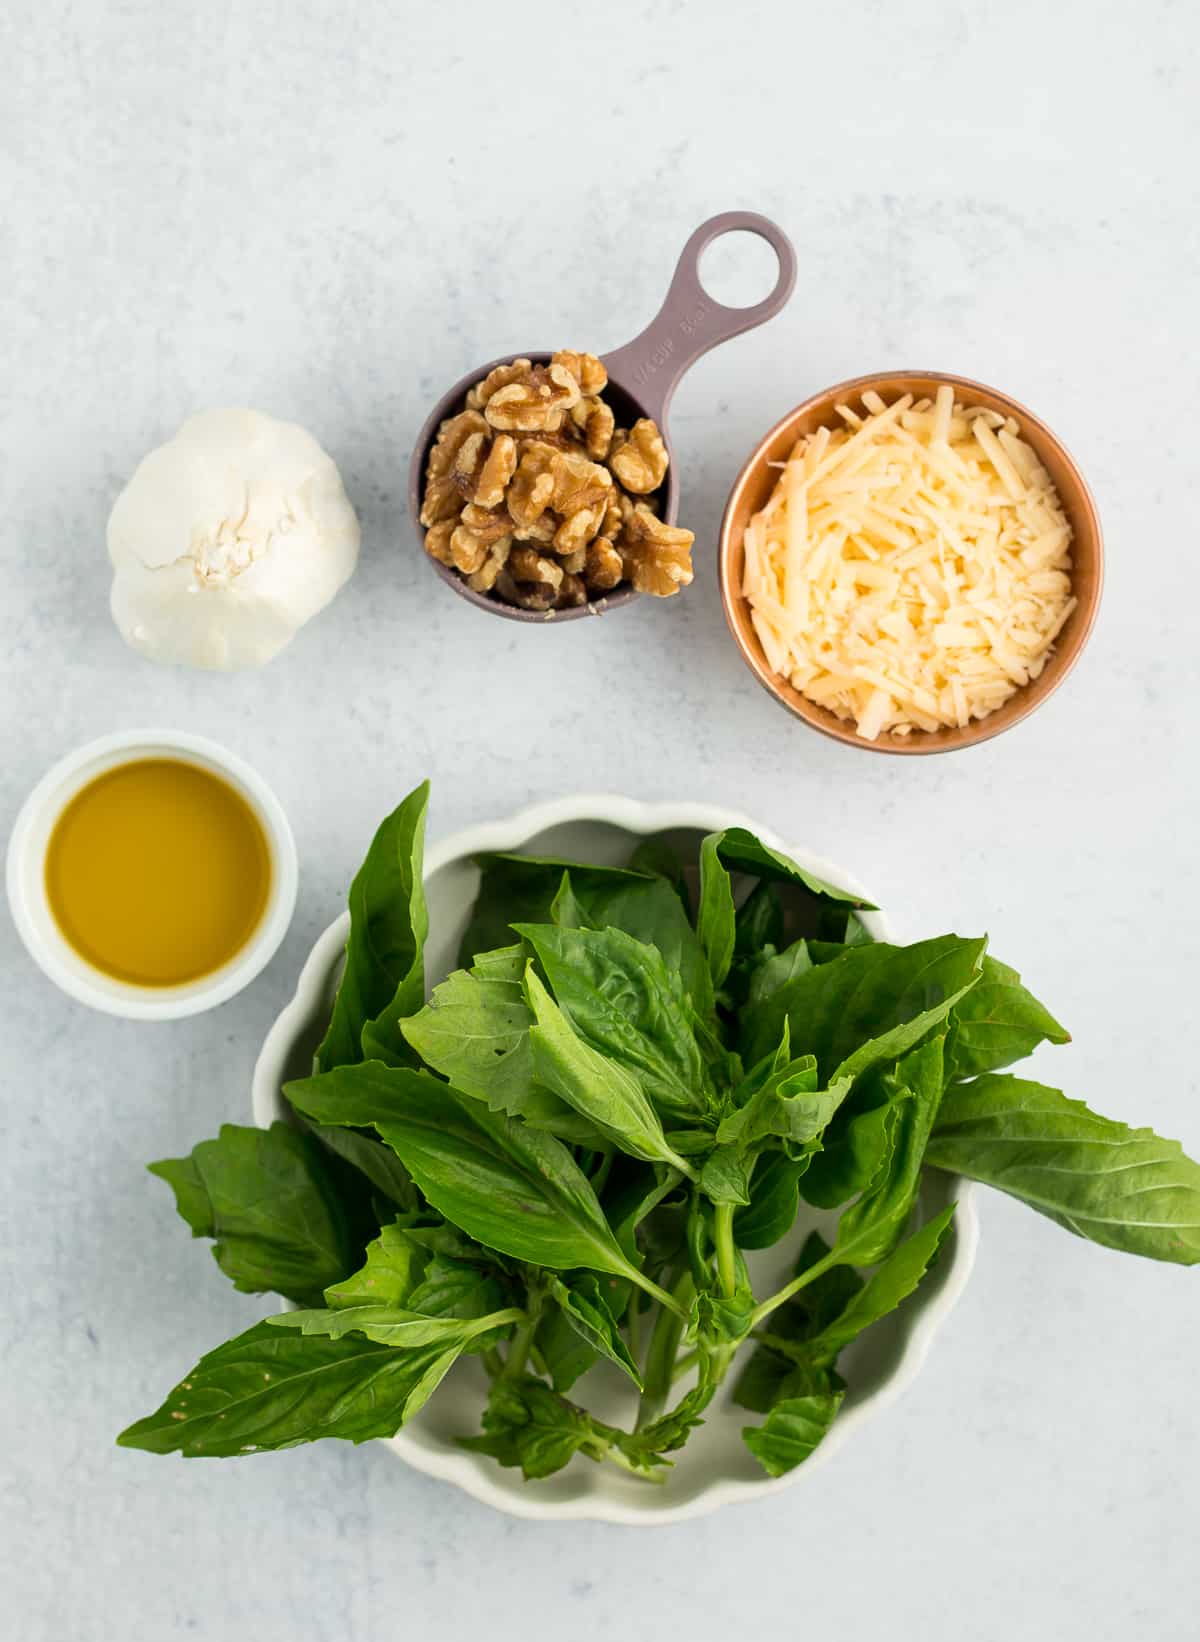 basil, Parmesan cheese, walnuts, garlic, and olive oil on a grey board.